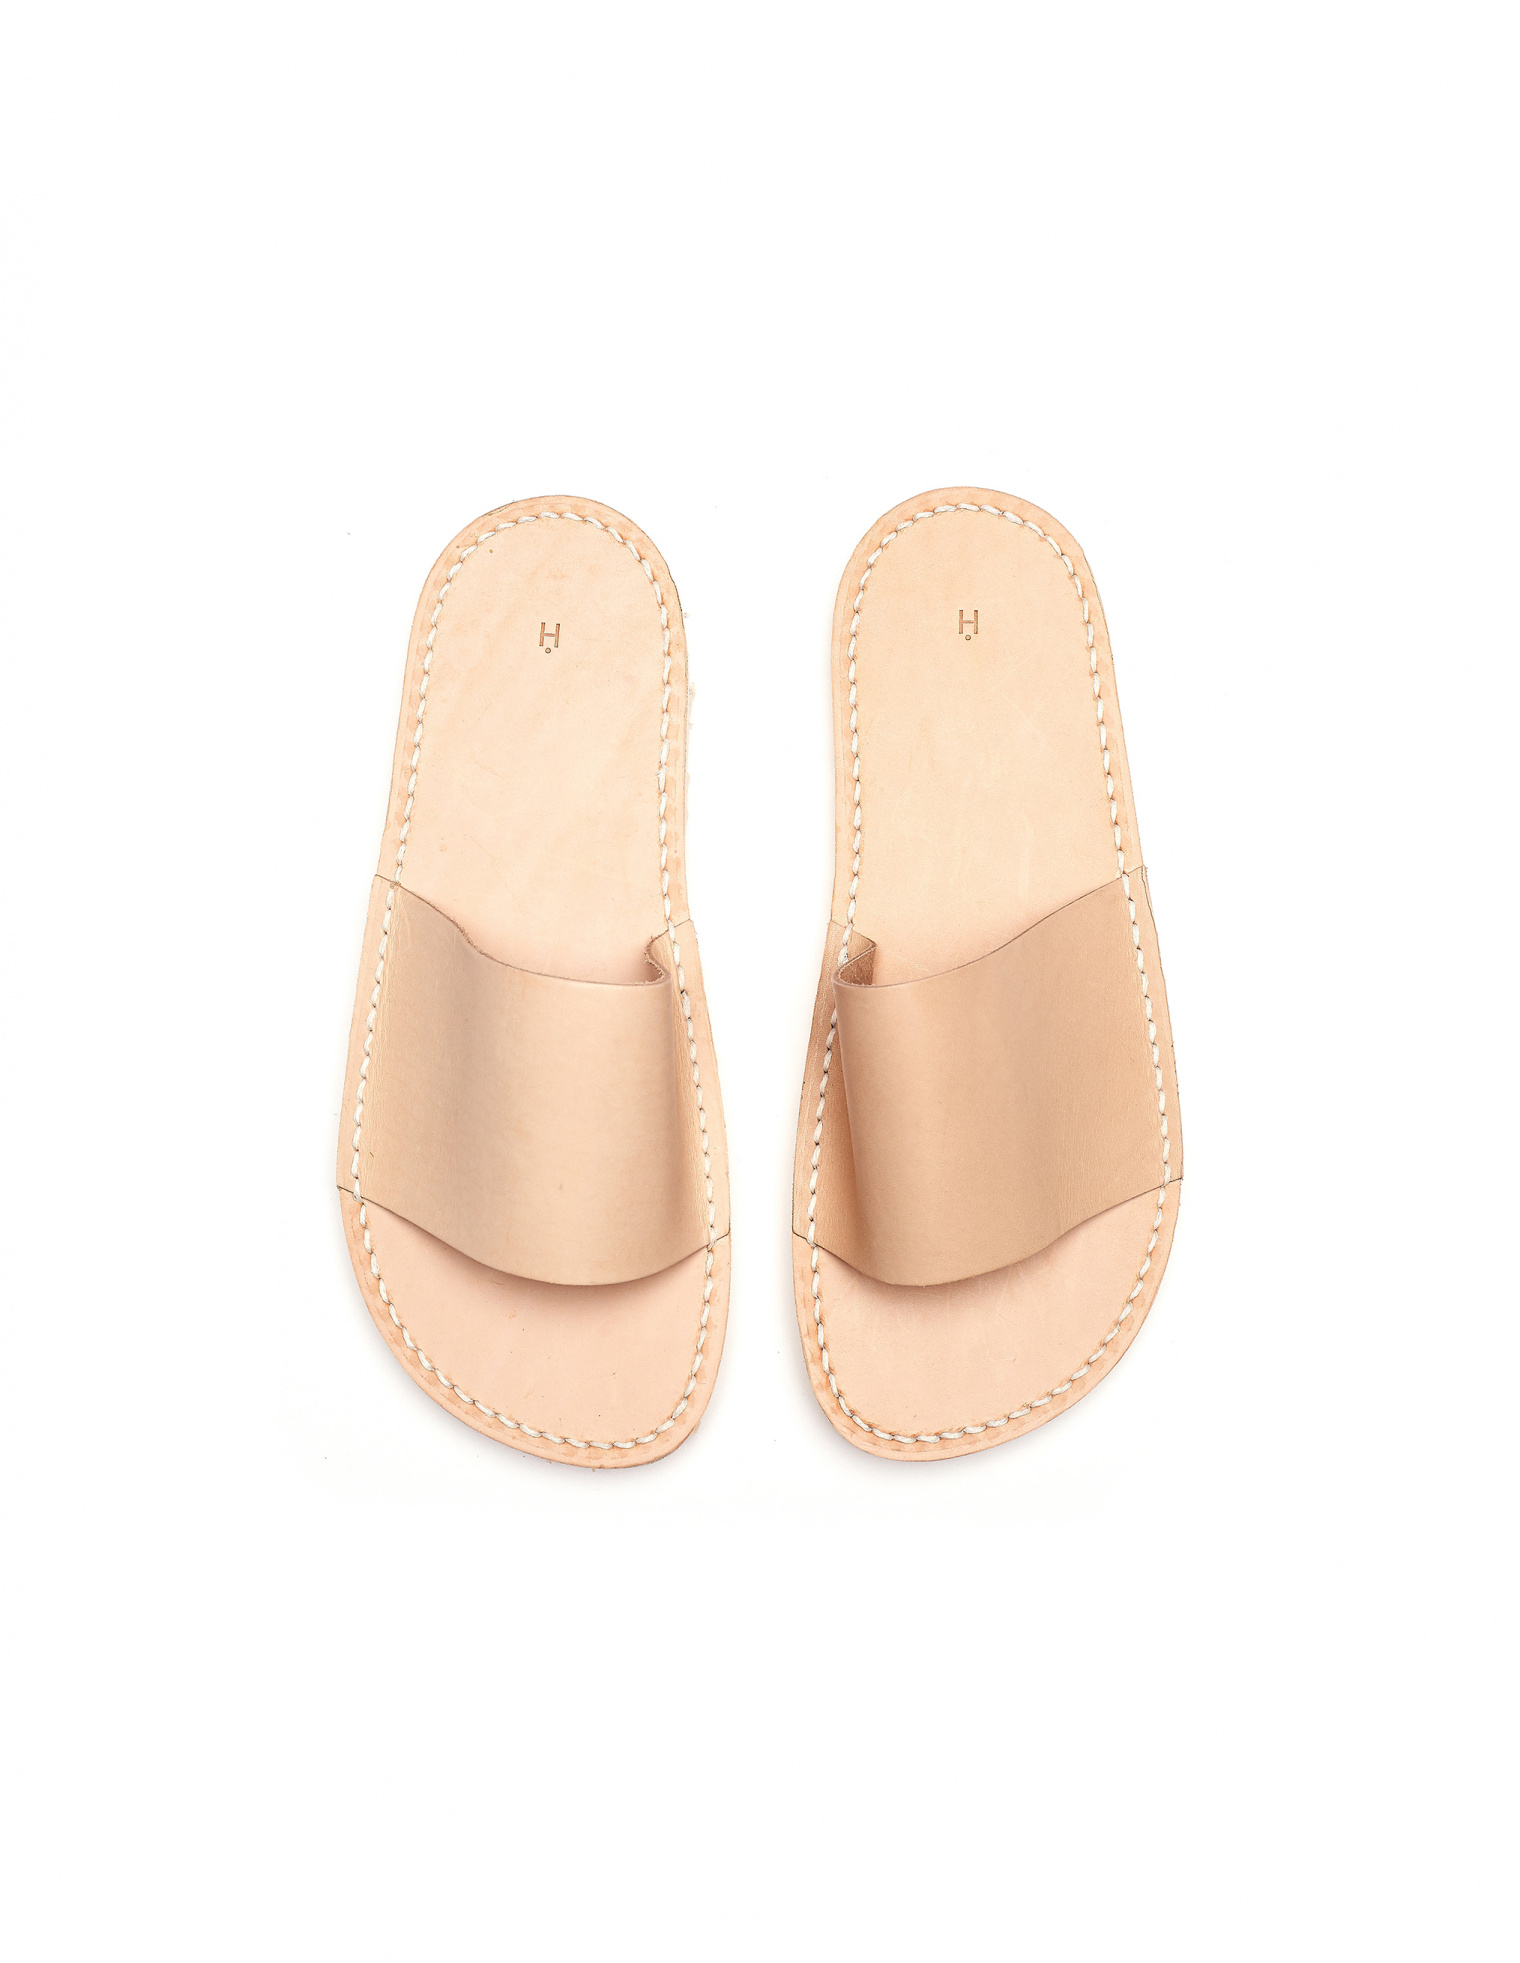 Buy Hender Scheme women beige atelier slipper in natural leather